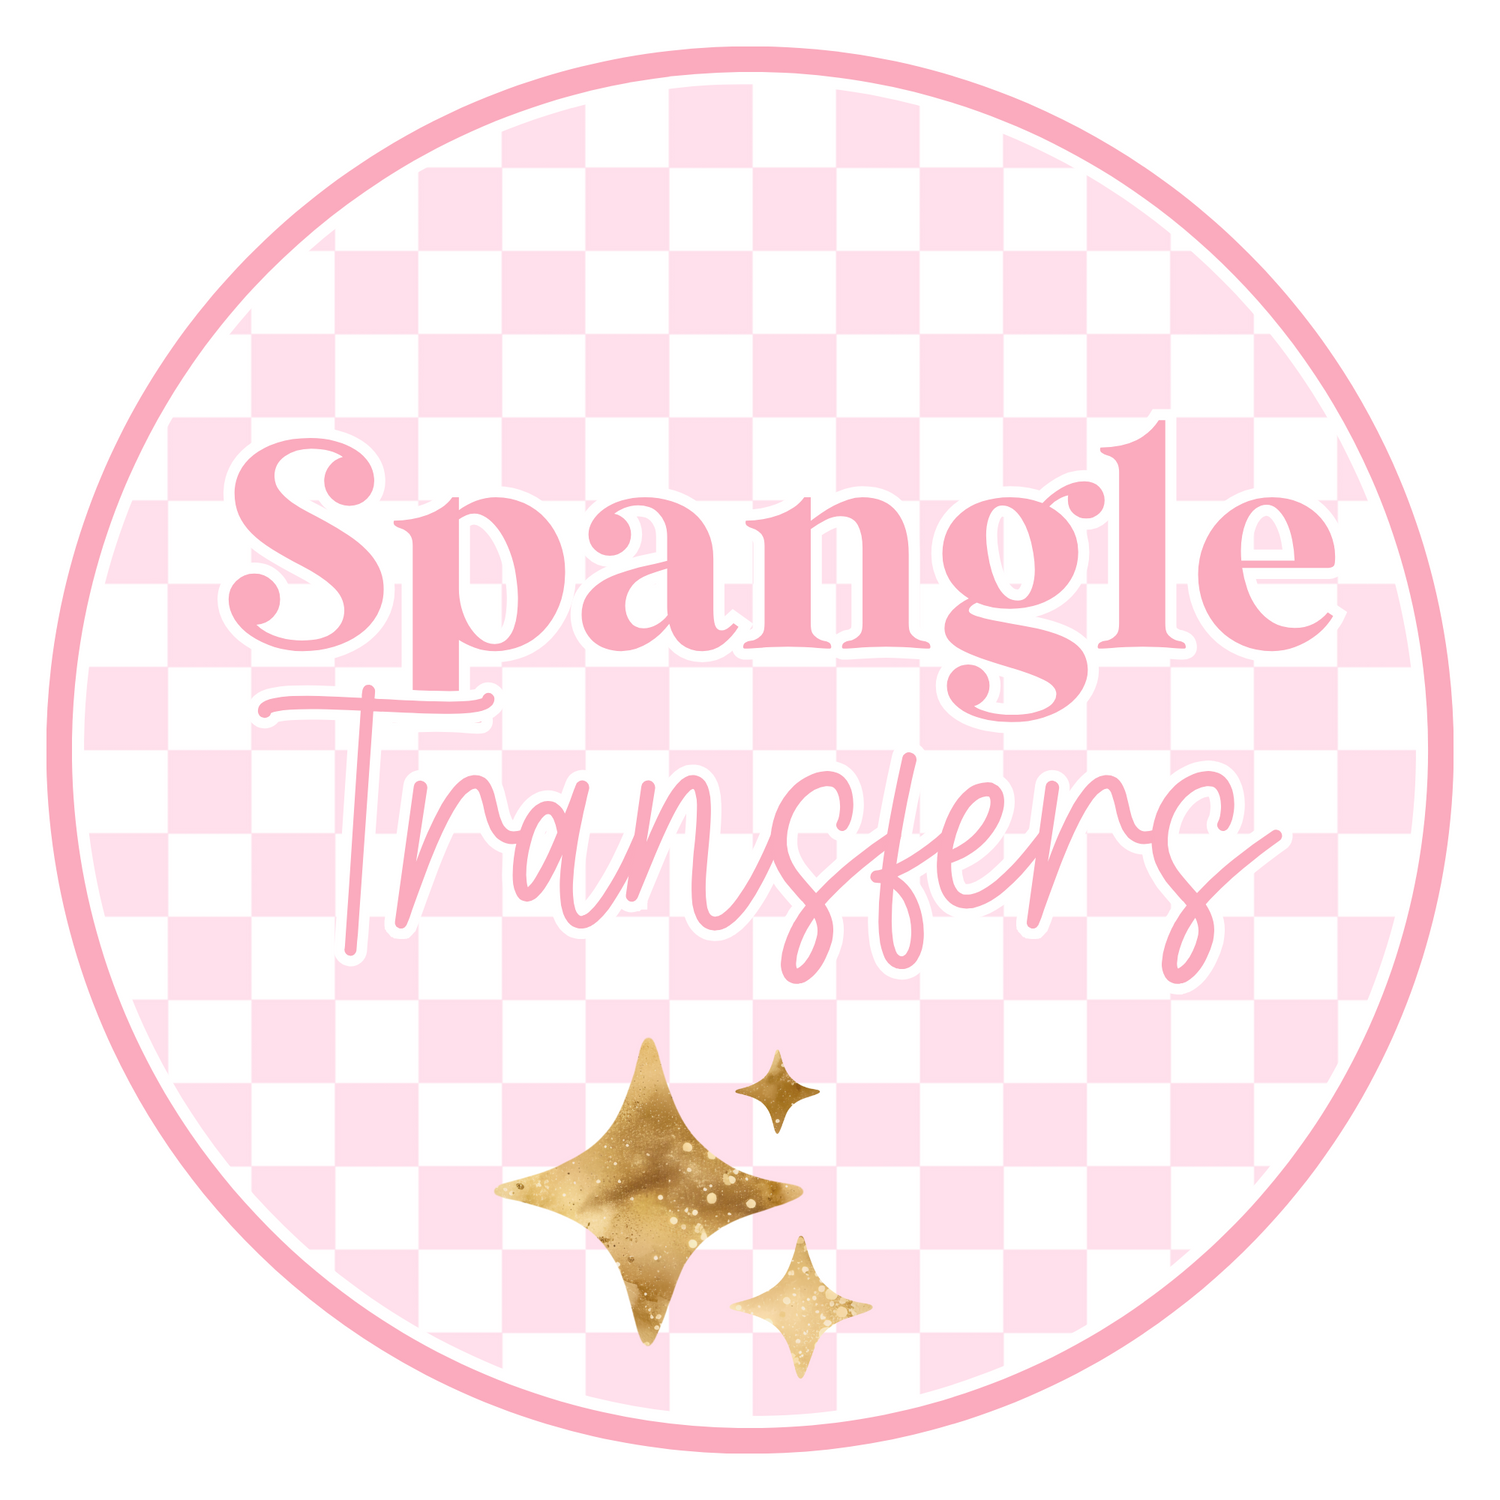 Spangle Transfers